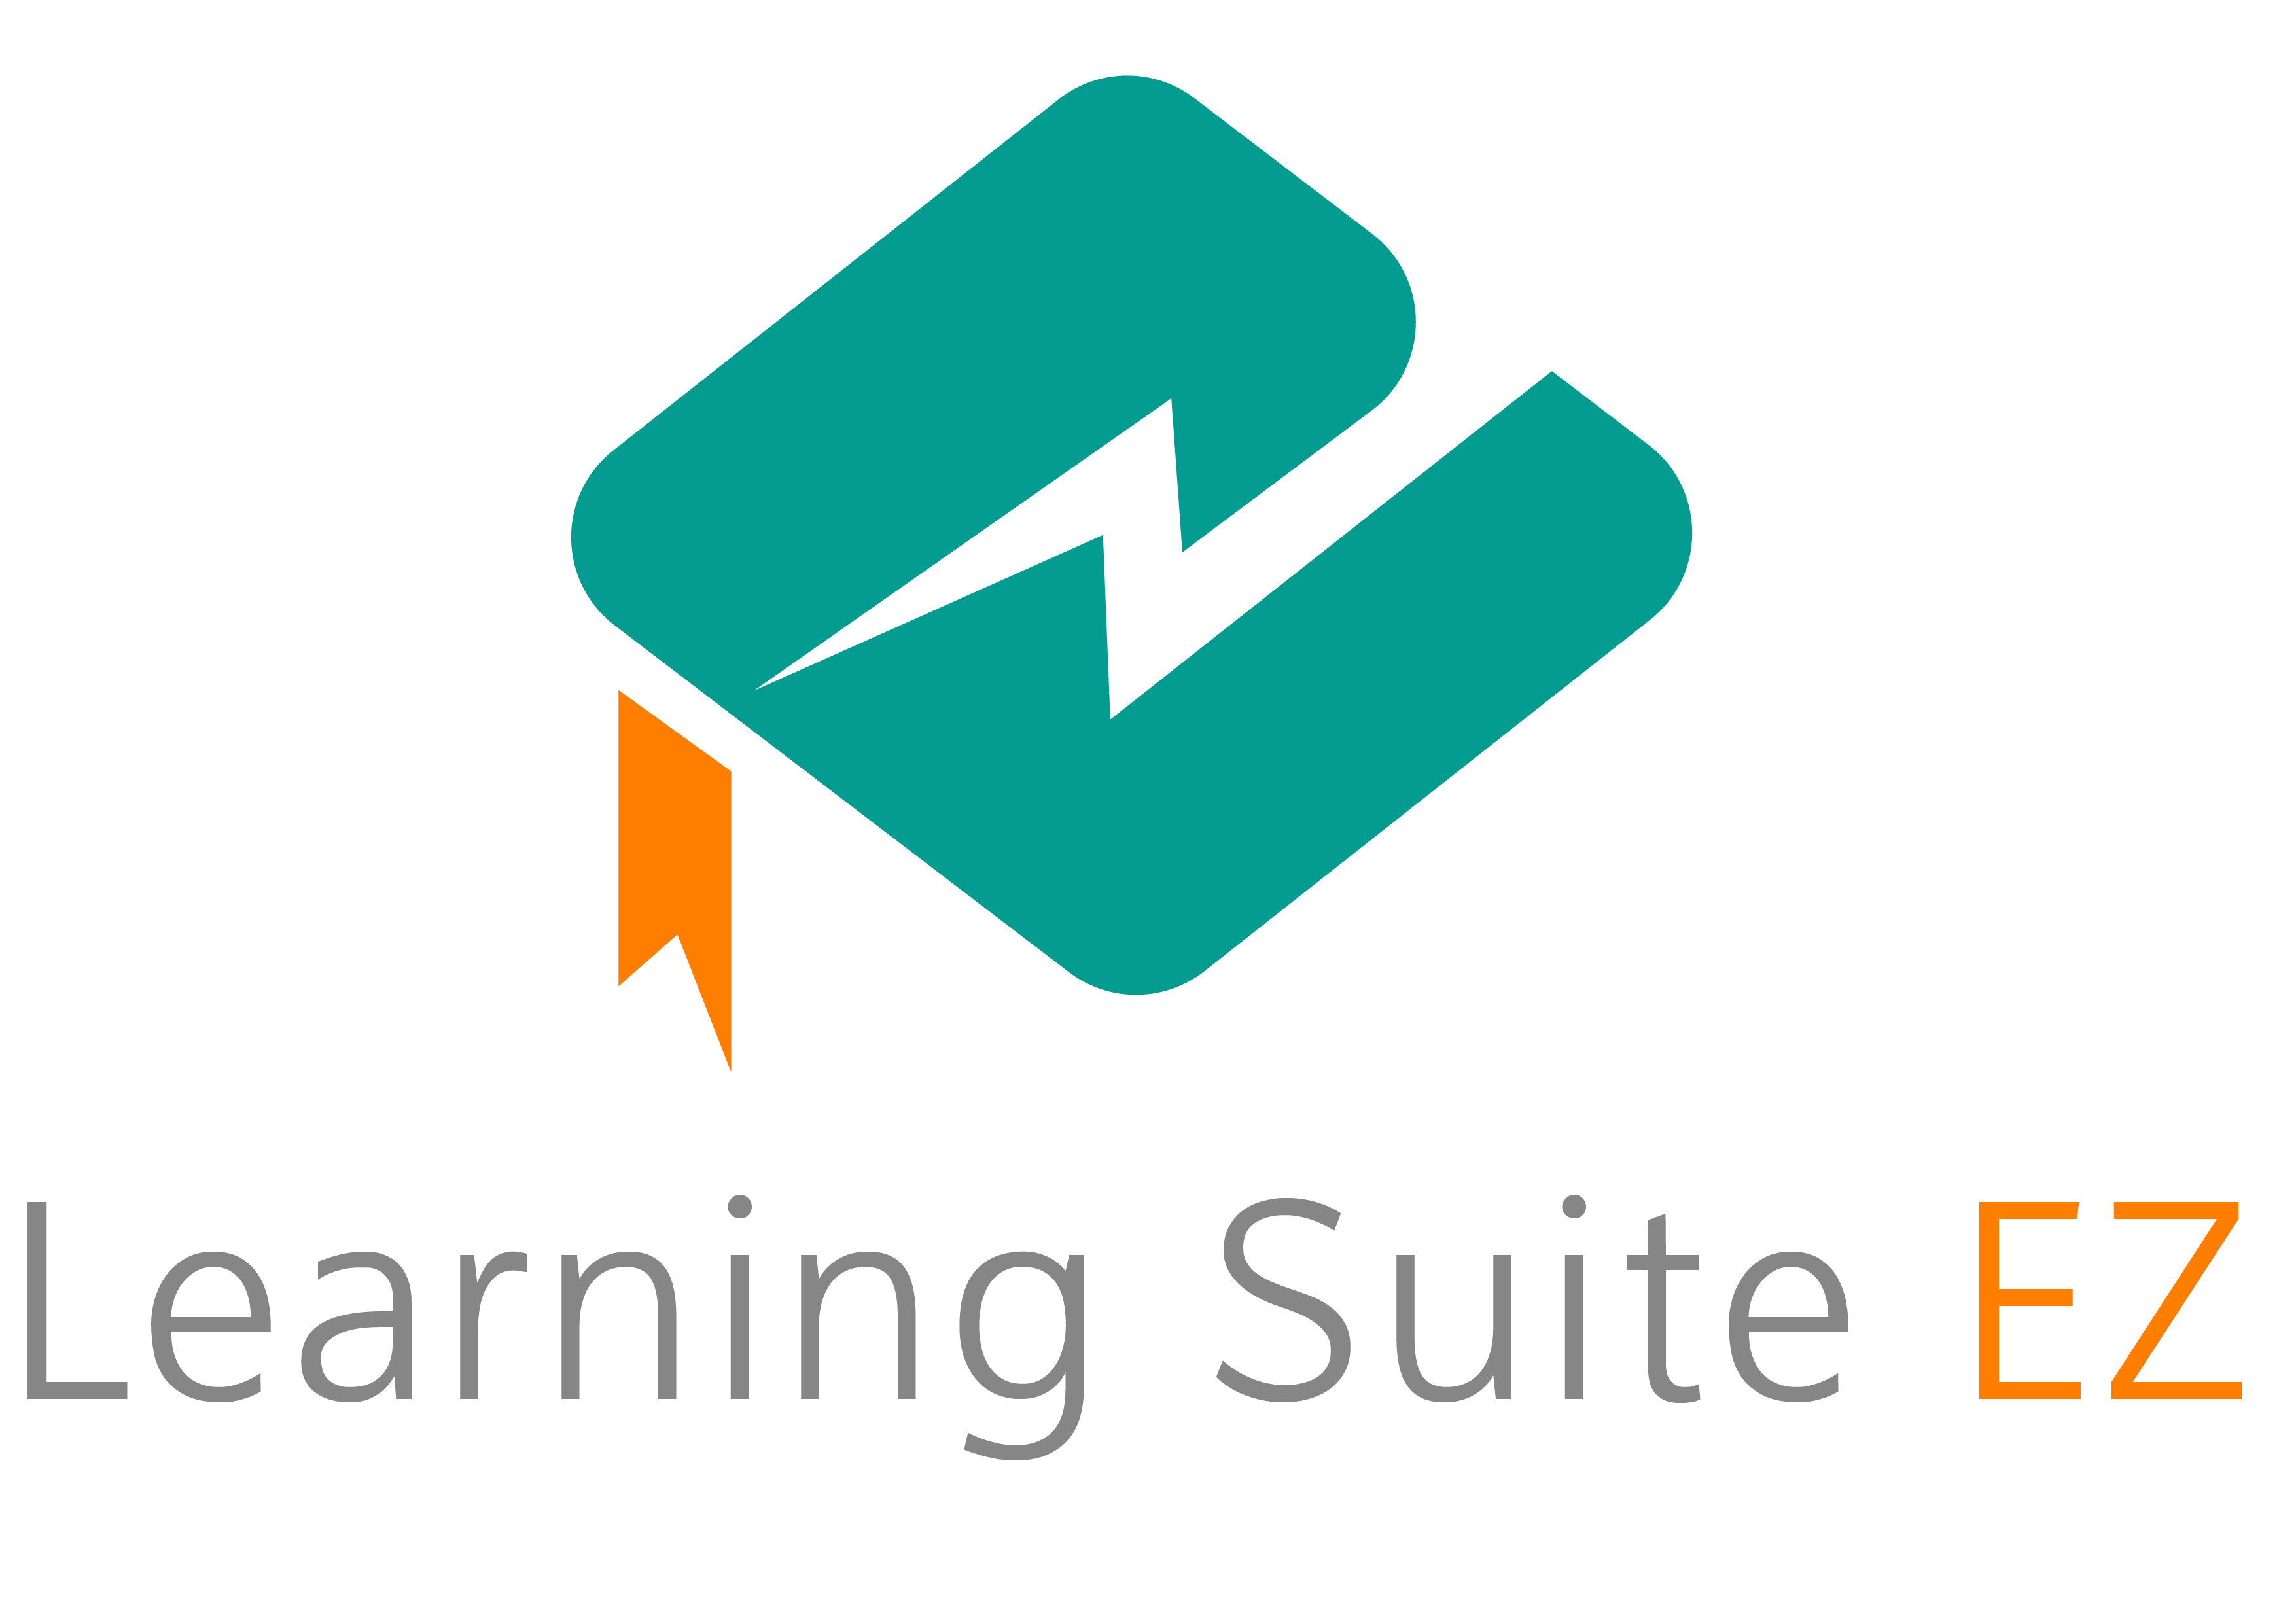 LearningSuite EZ